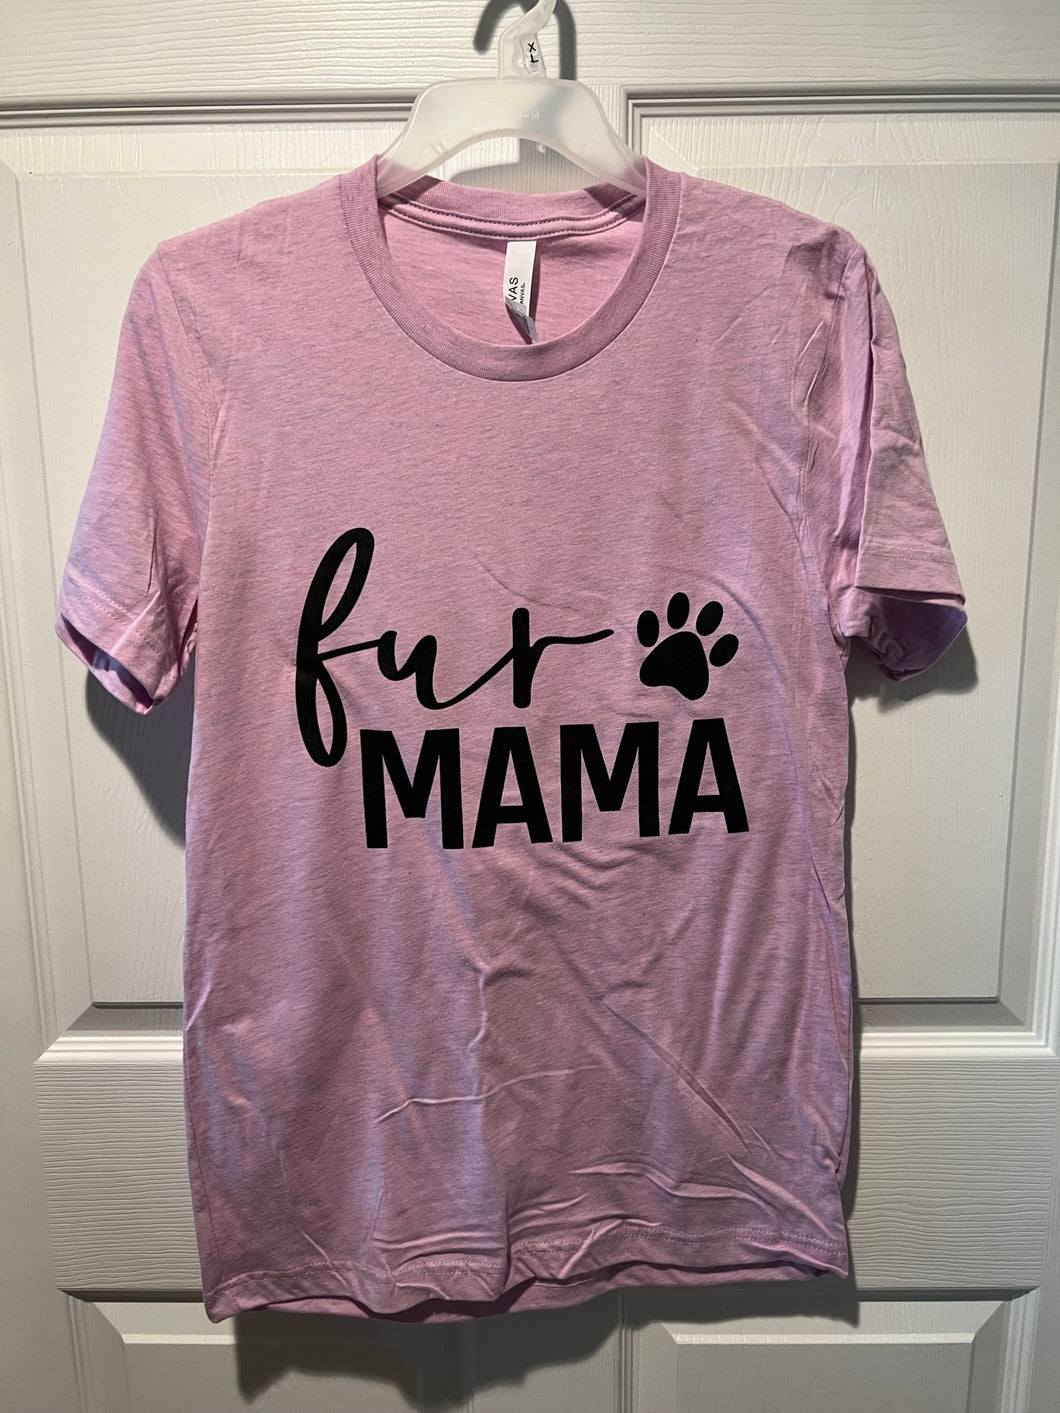 Fur Mama Shirt - Size Small